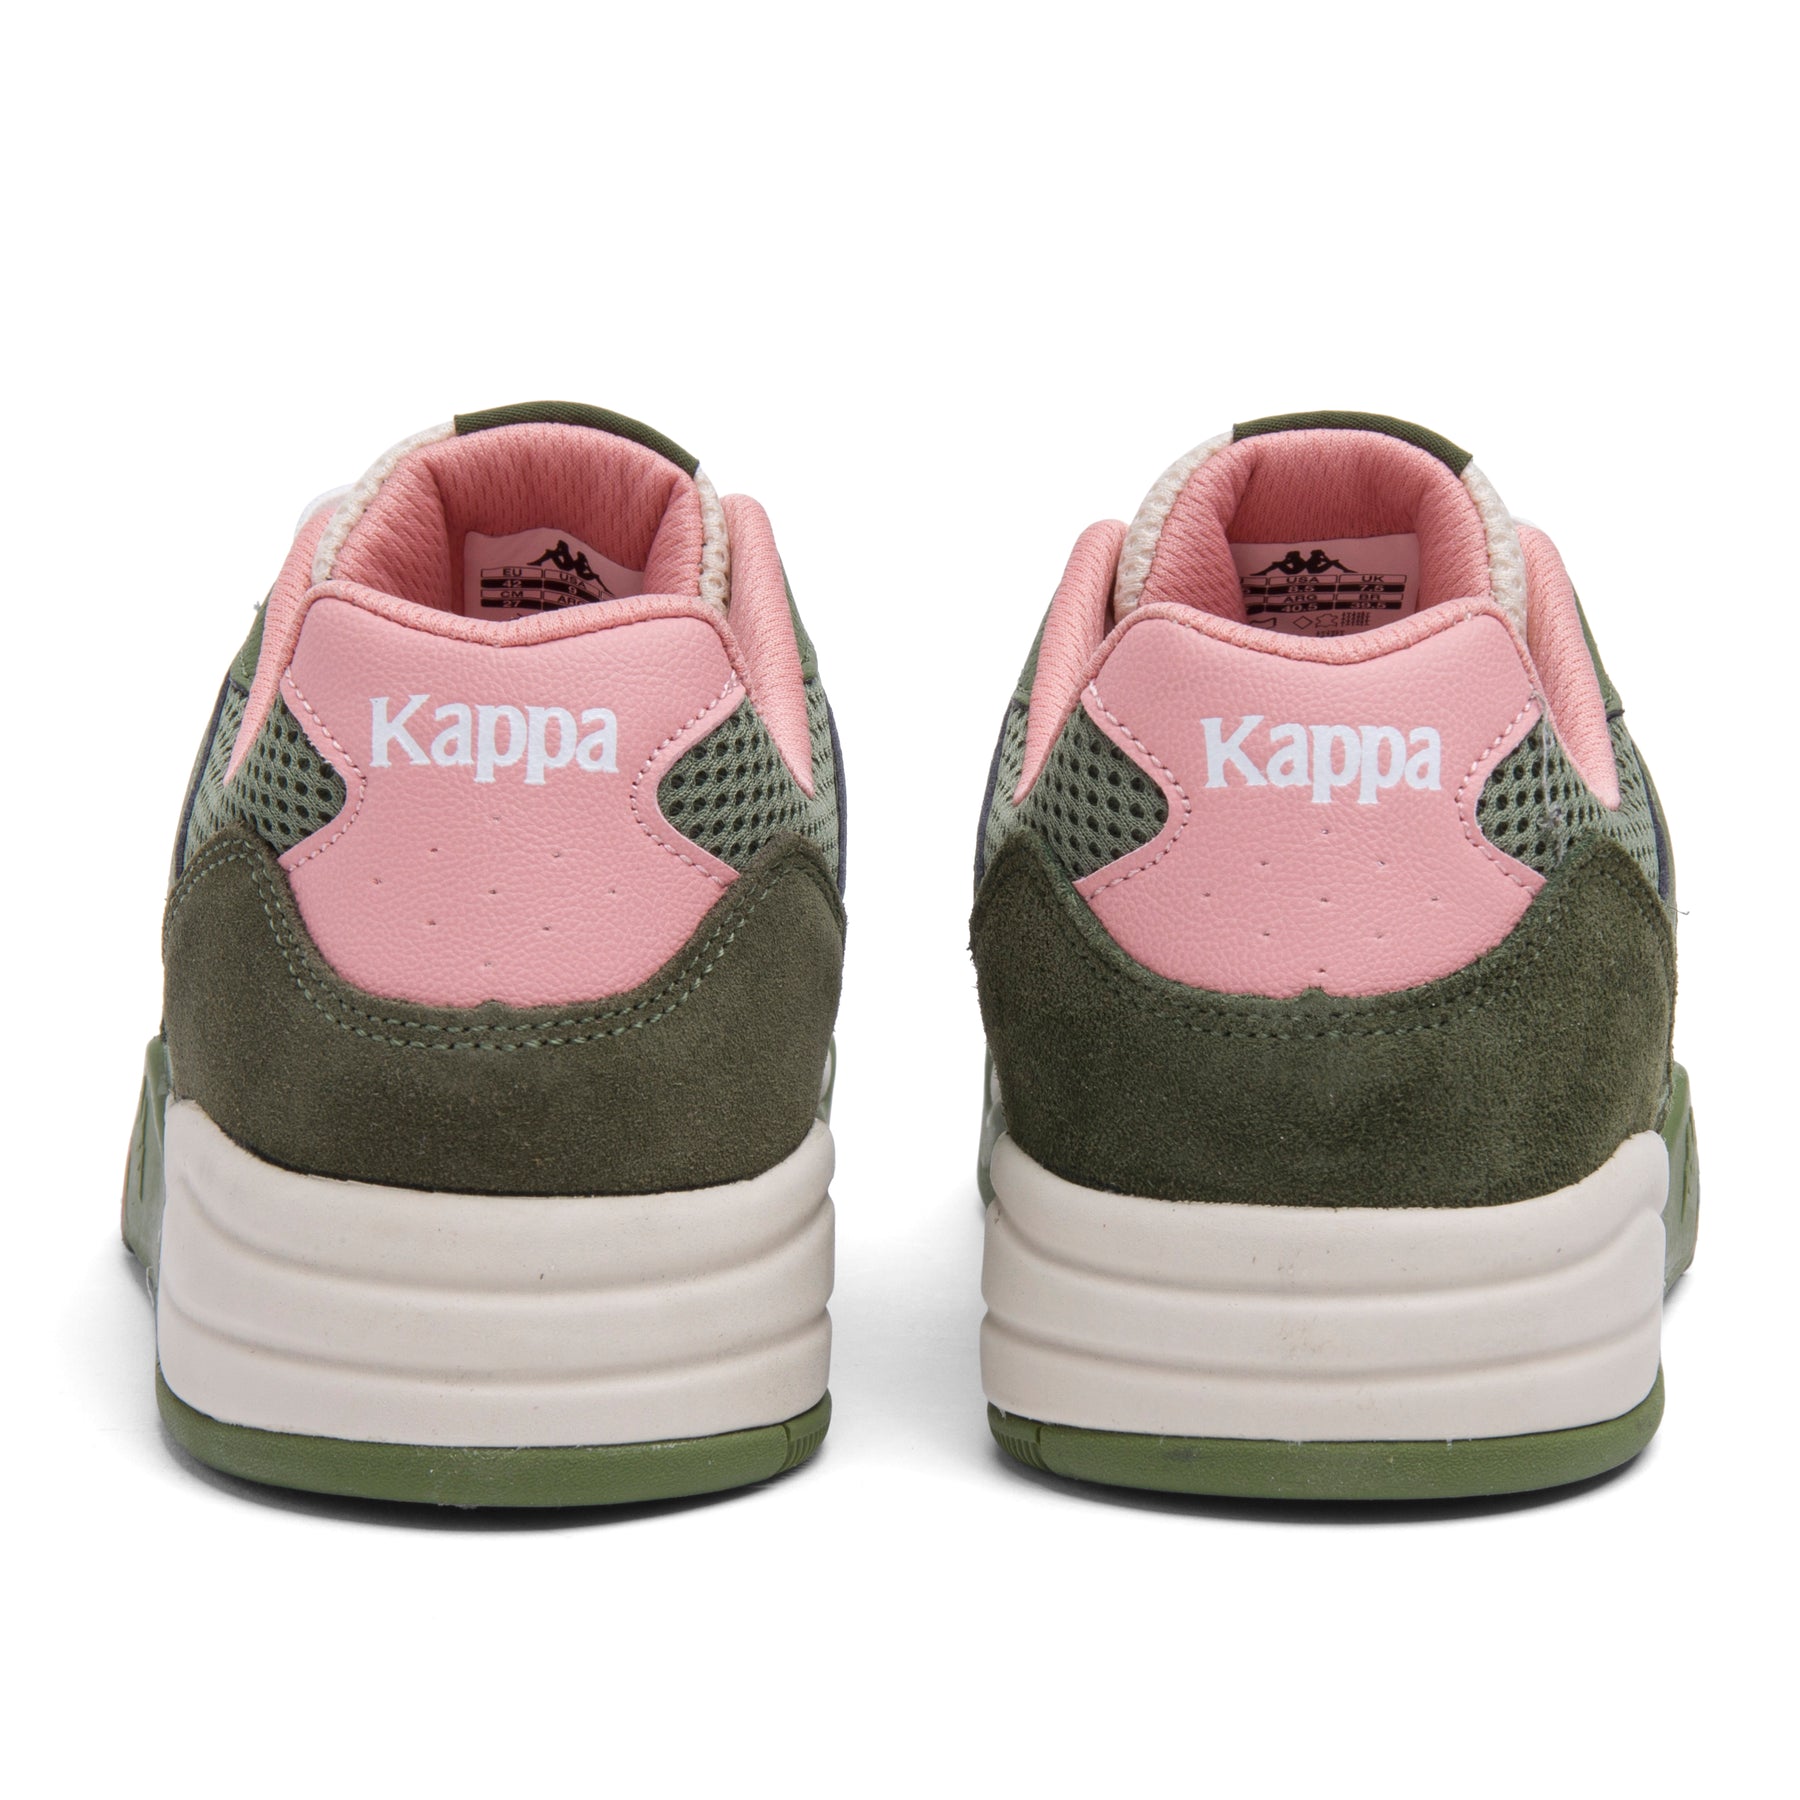 Kappa USA - – Pink 2 Olive Green Atlanta Sneakers Authentic